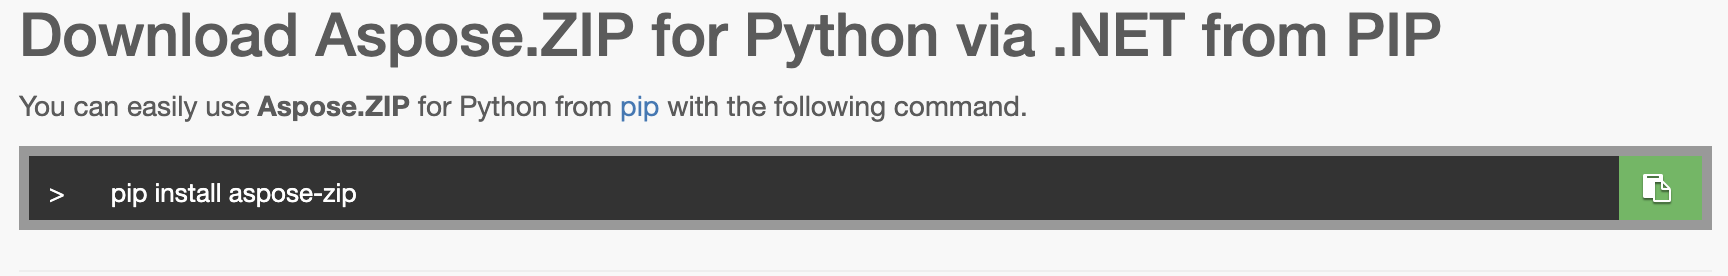 biblioteka kompresji Python